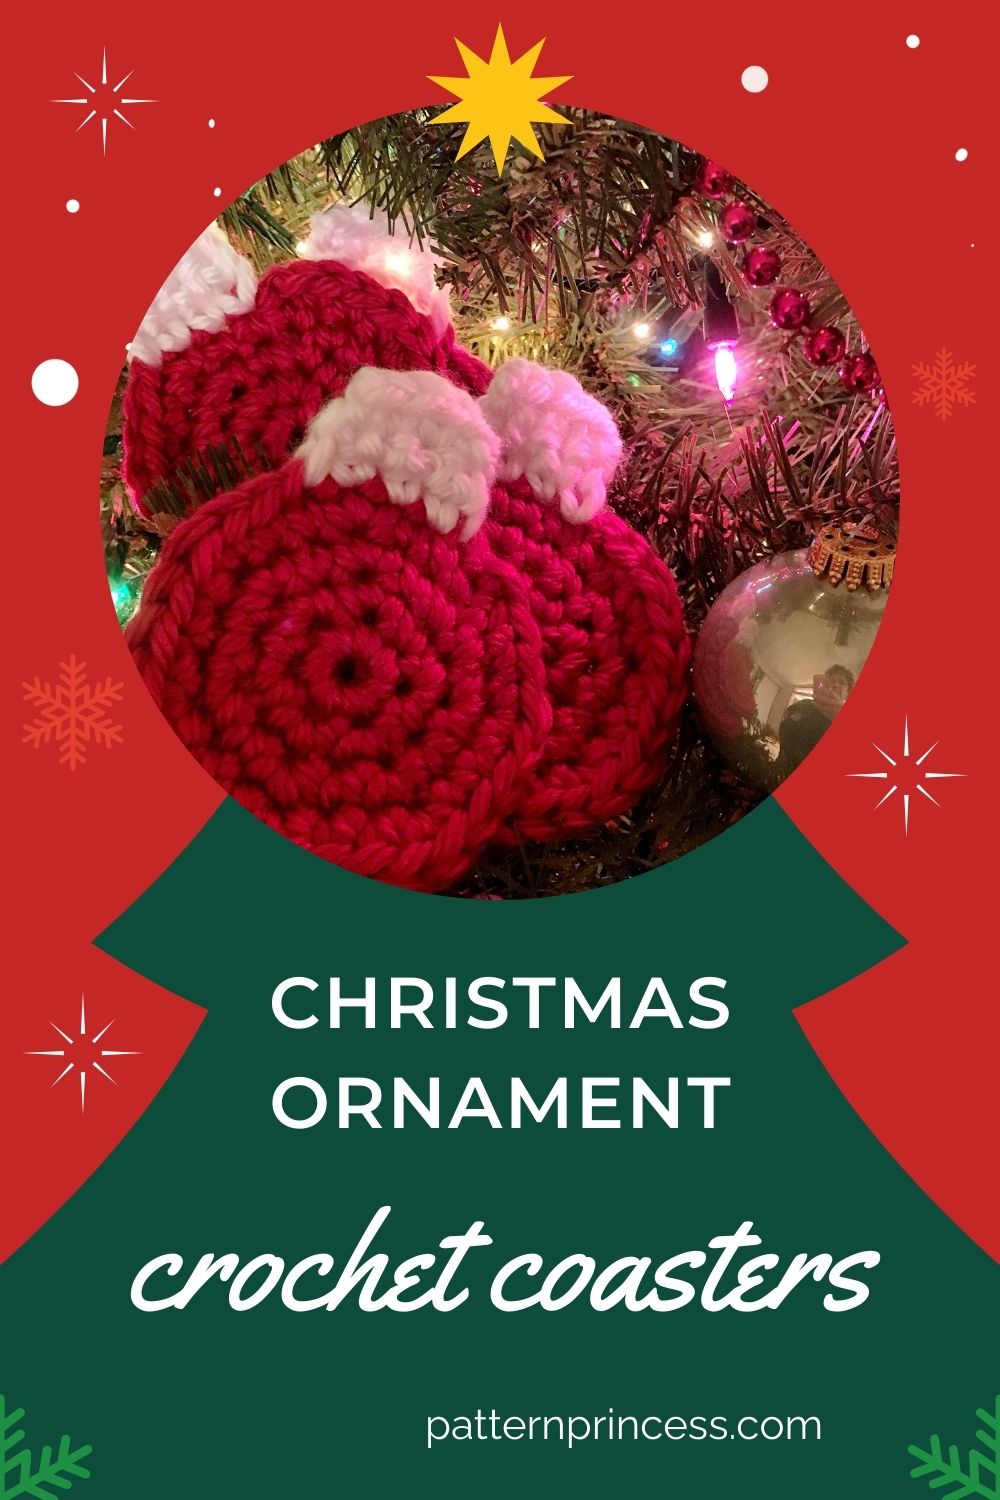 Christmas ornament crochet coasters